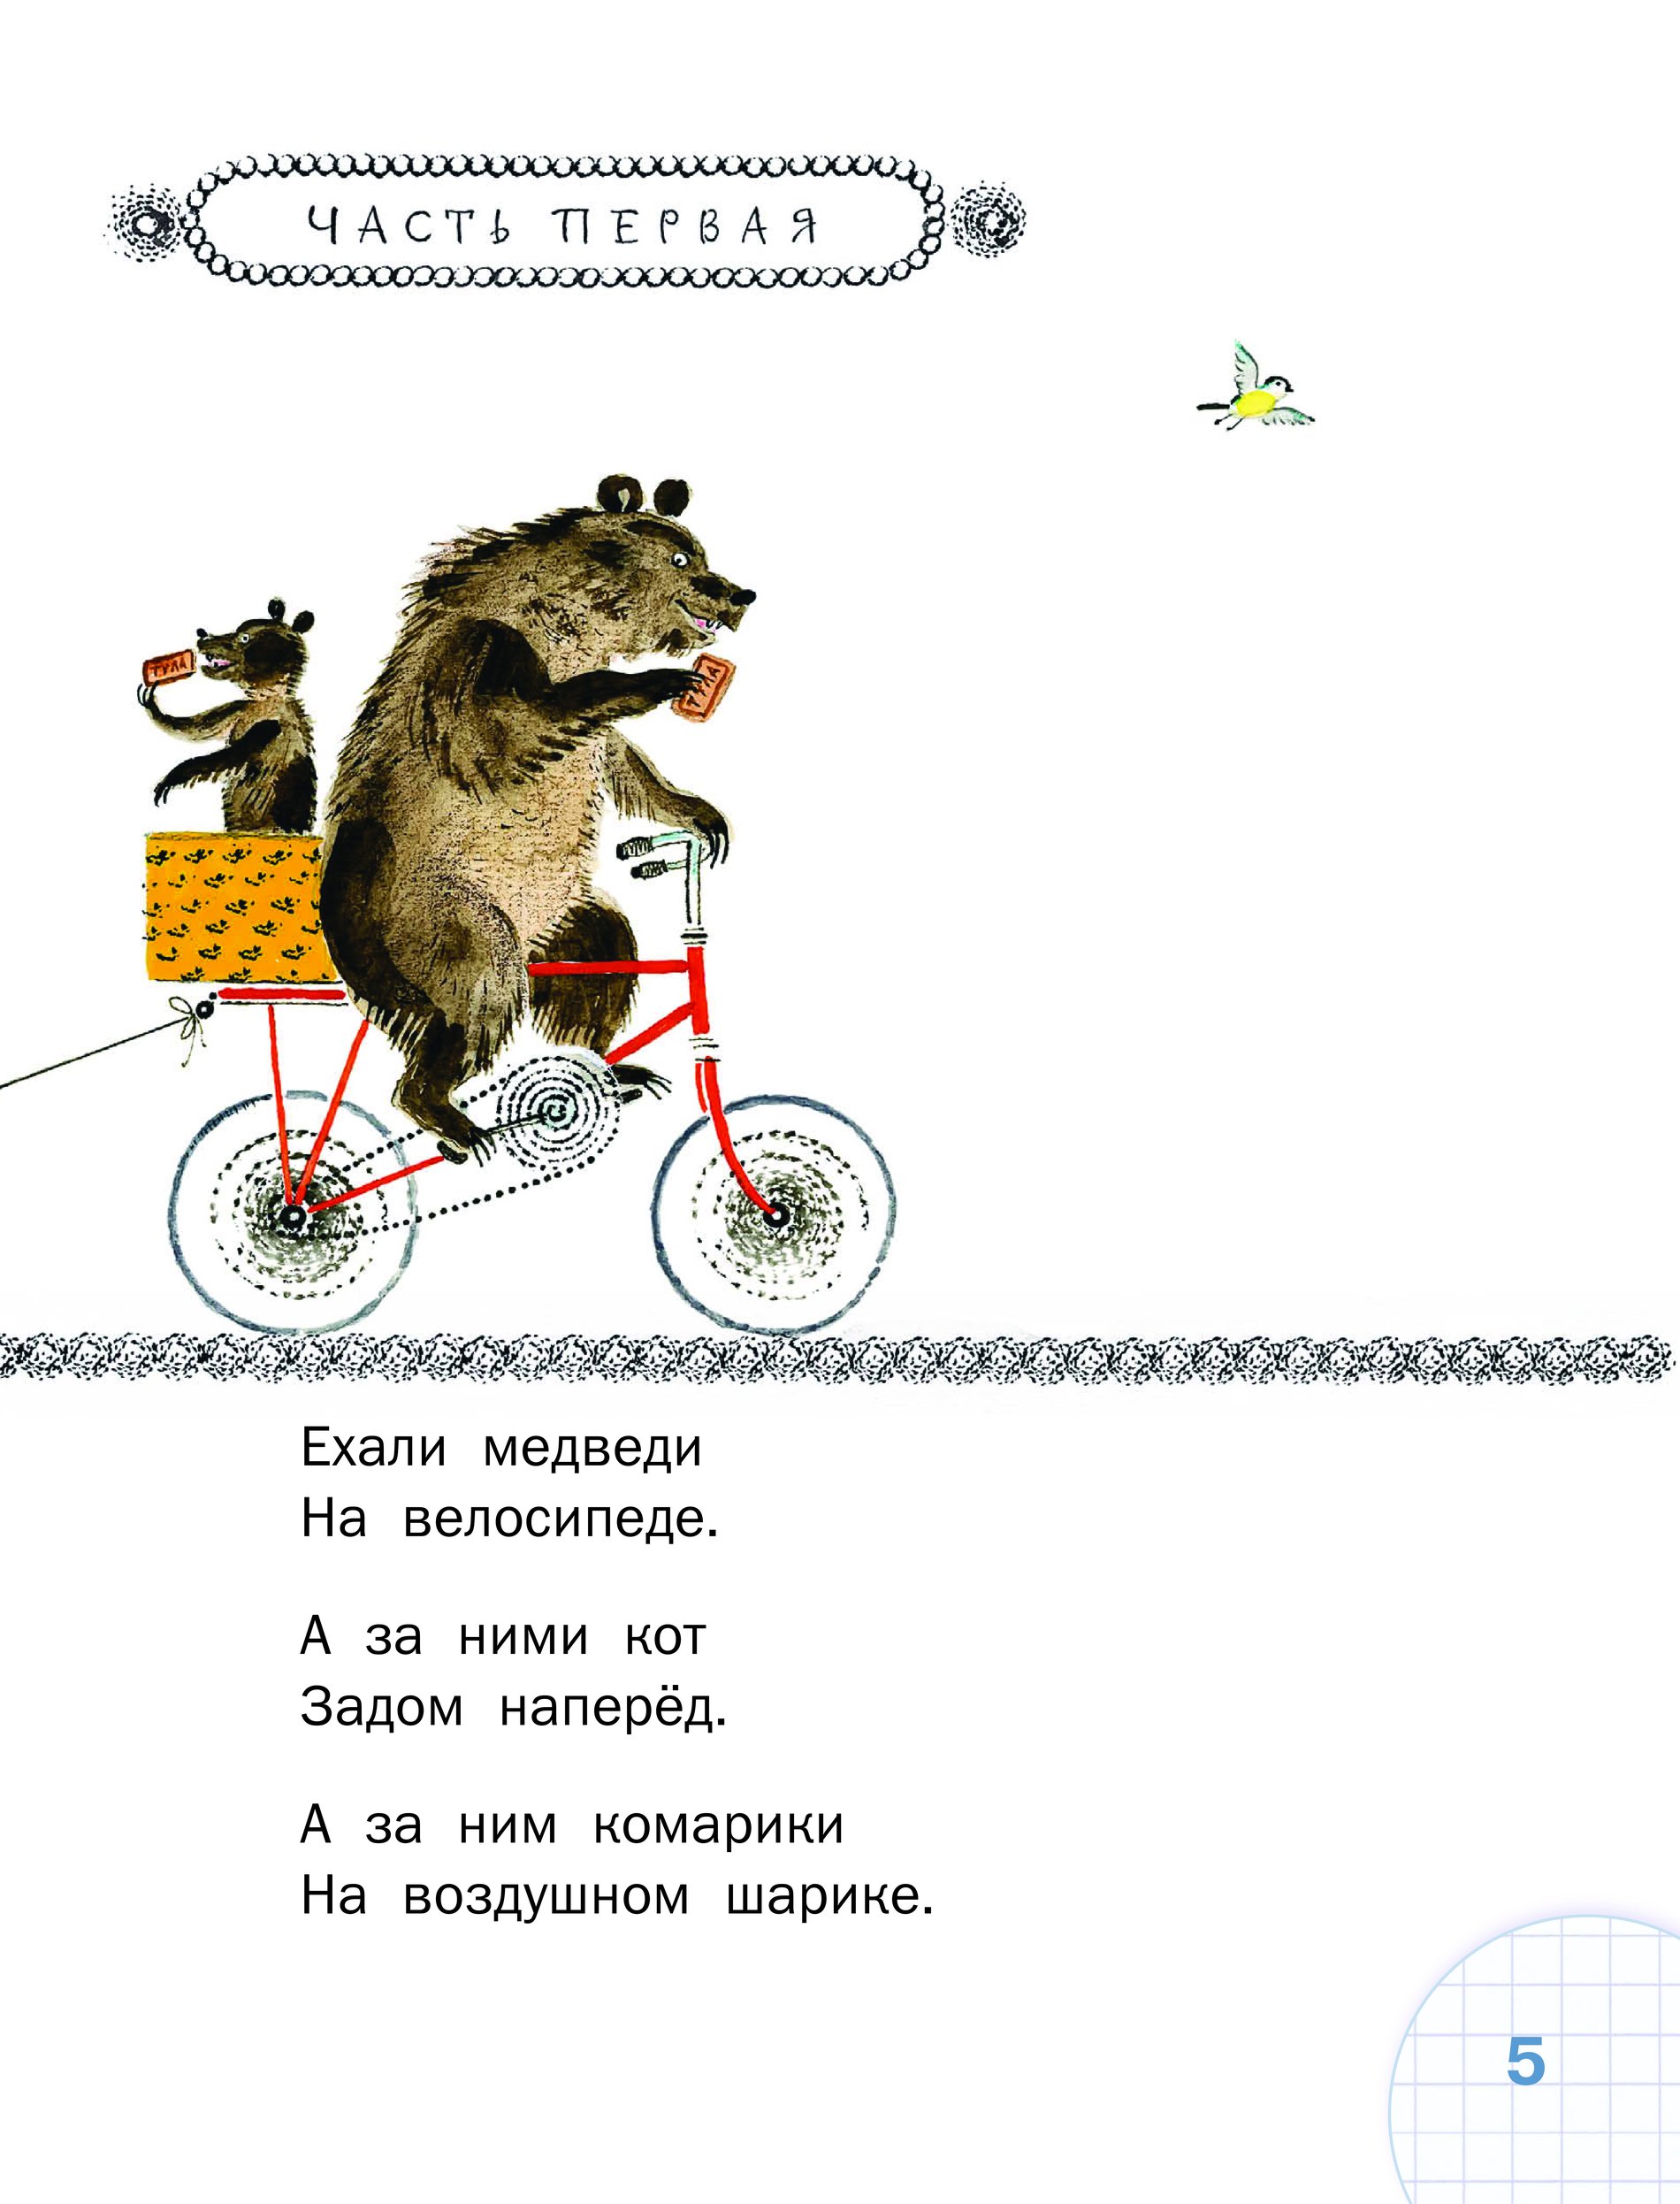 Тараканище ехали медведи на велосипеде песня. Ехали медведи на велосипеде иллюстрации. Медведи на велосипеде а за ними кот задом. Медведи на велосипеде комарики на воздушном. Тараканище а за ними кот задом наперёд.